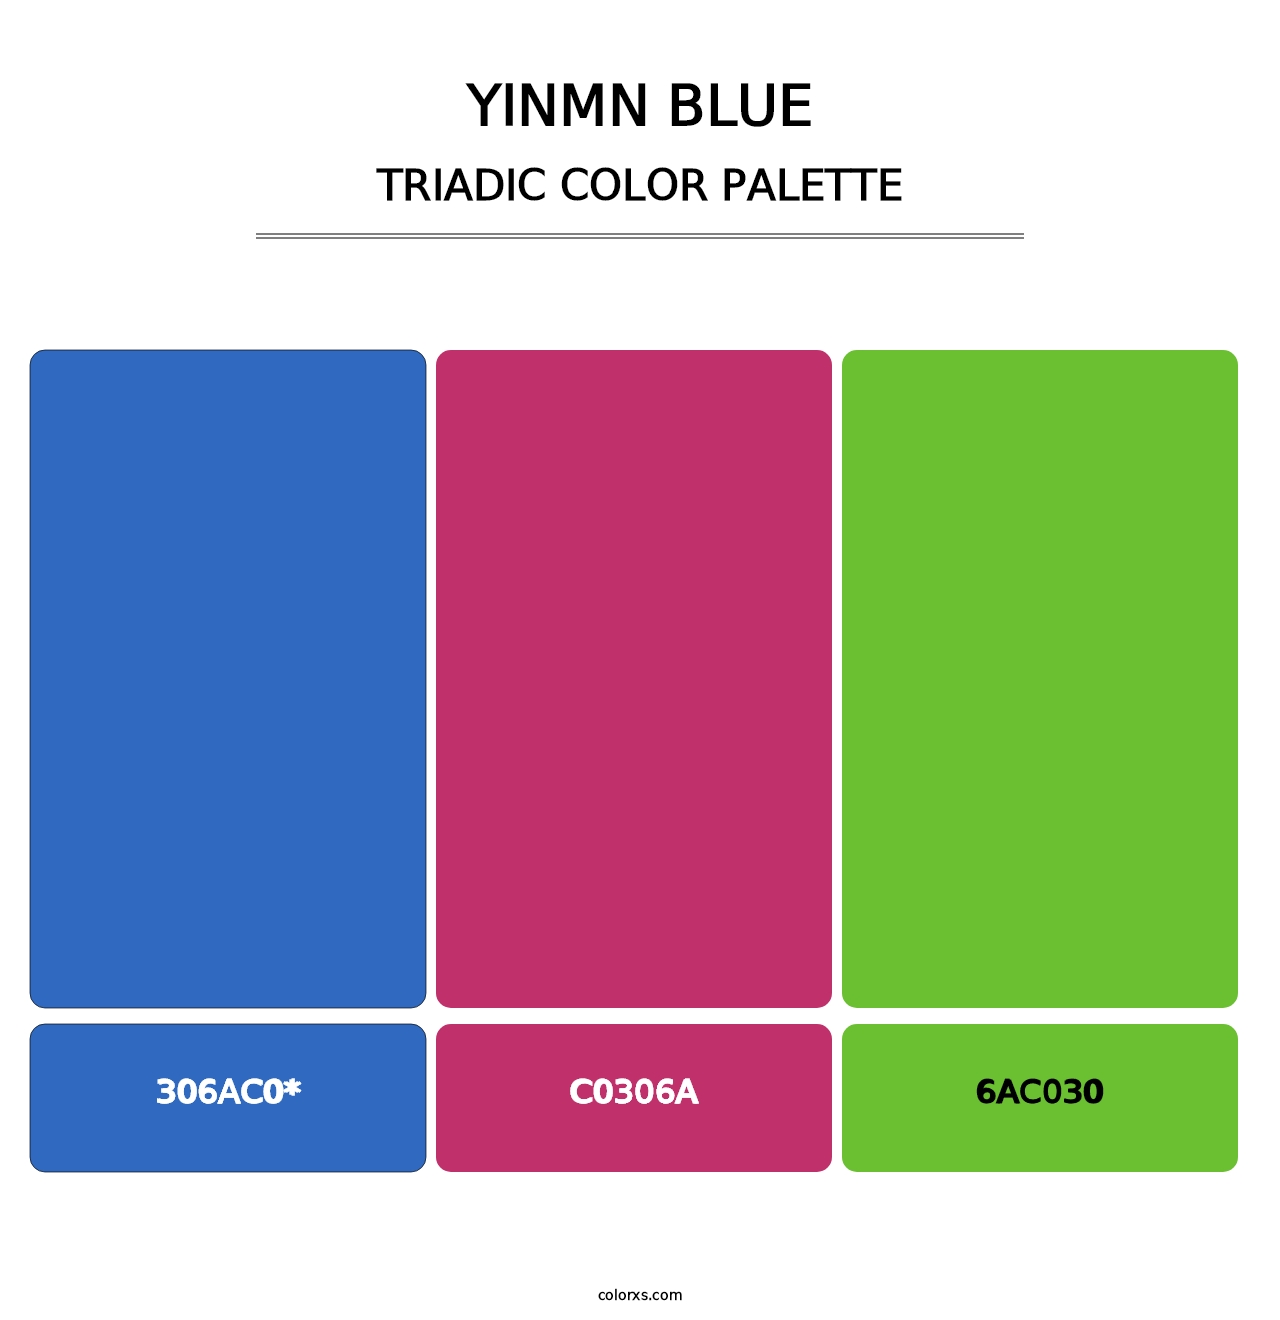 YInMn Blue - Triadic Color Palette